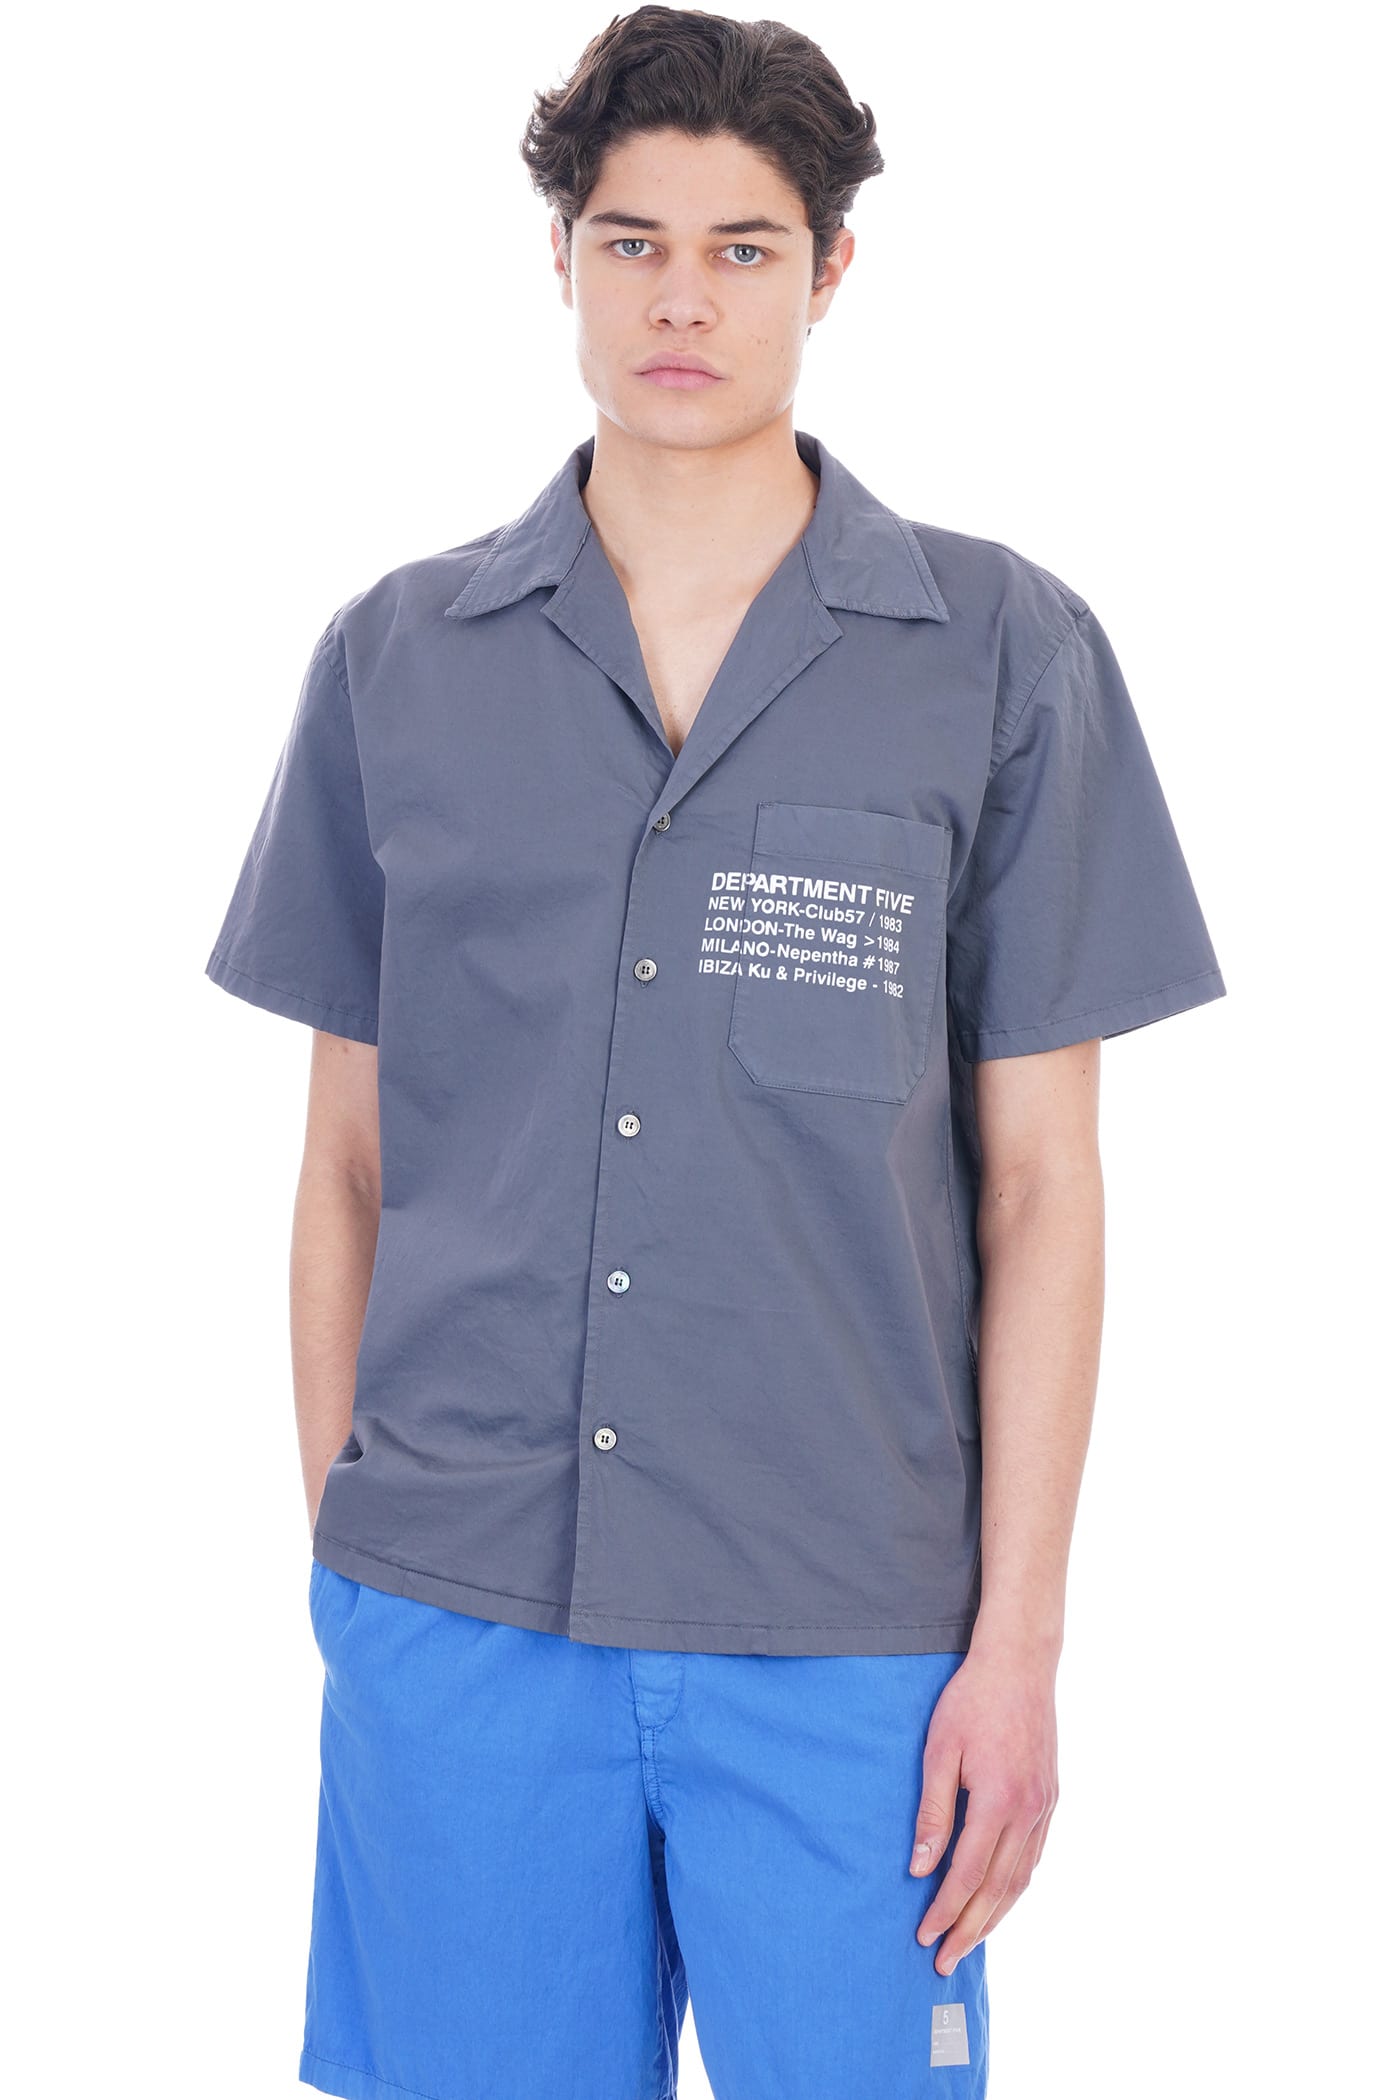 Department Five Digital Shirt In Grey Cotton